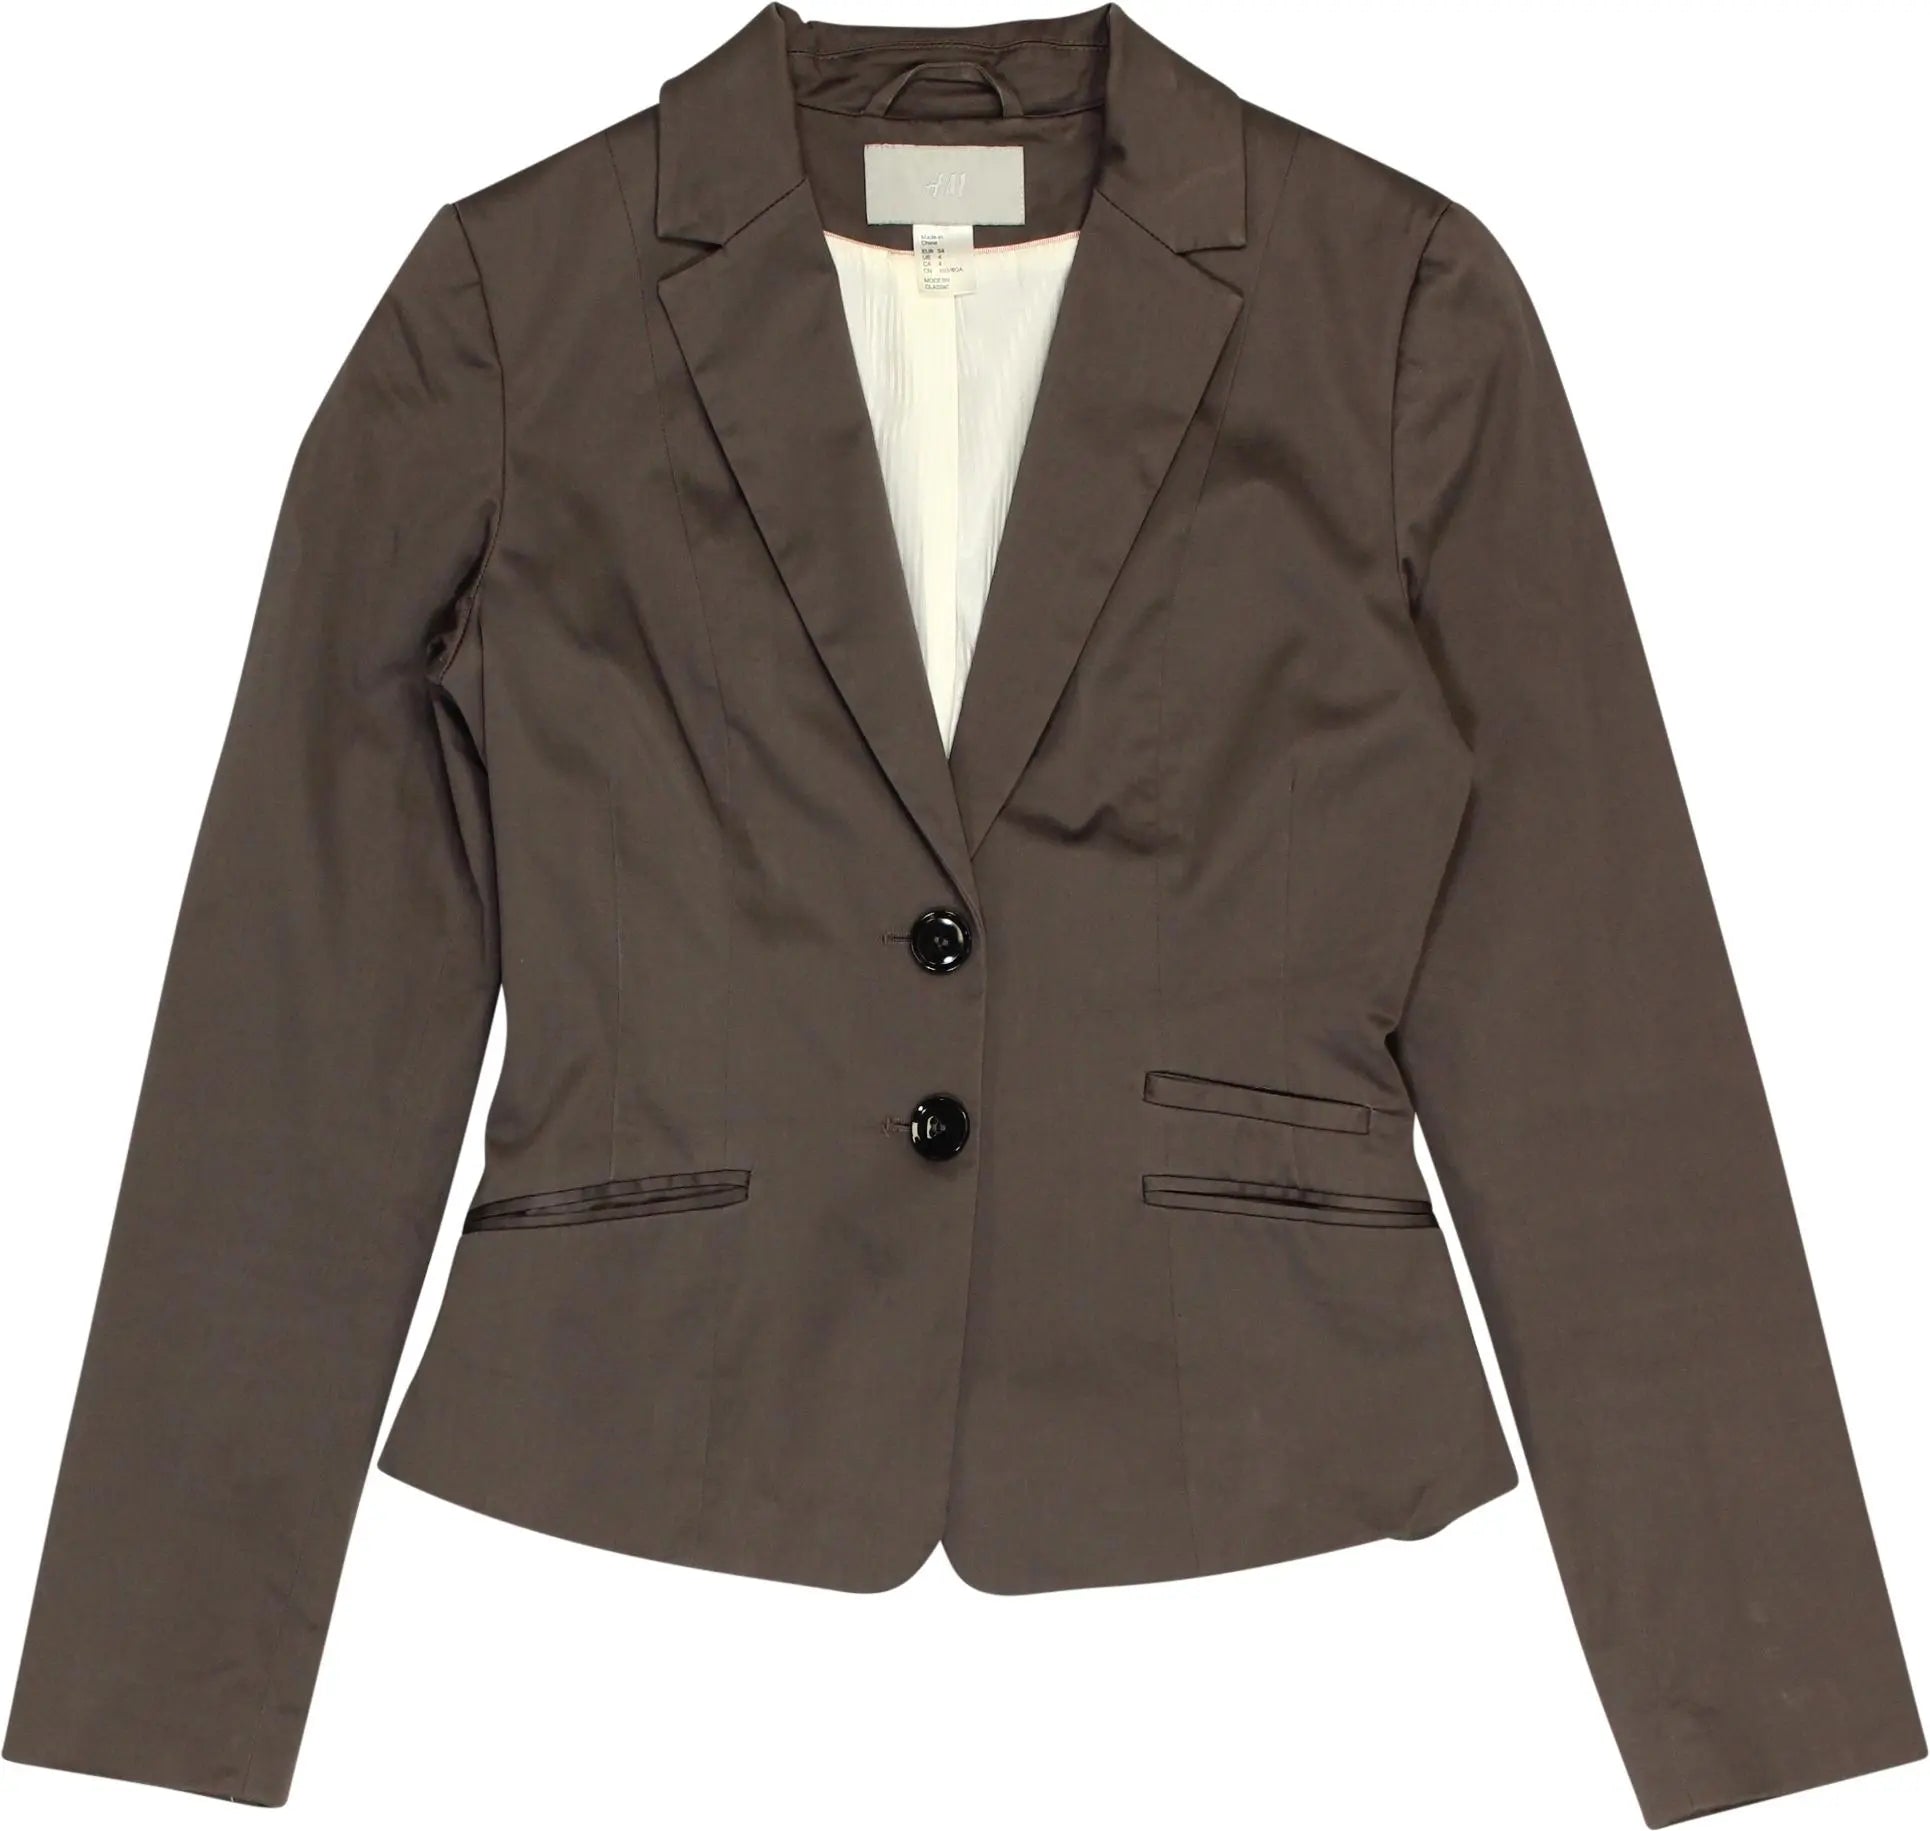 H&M - Plain blazer- ThriftTale.com - Vintage and second handclothing